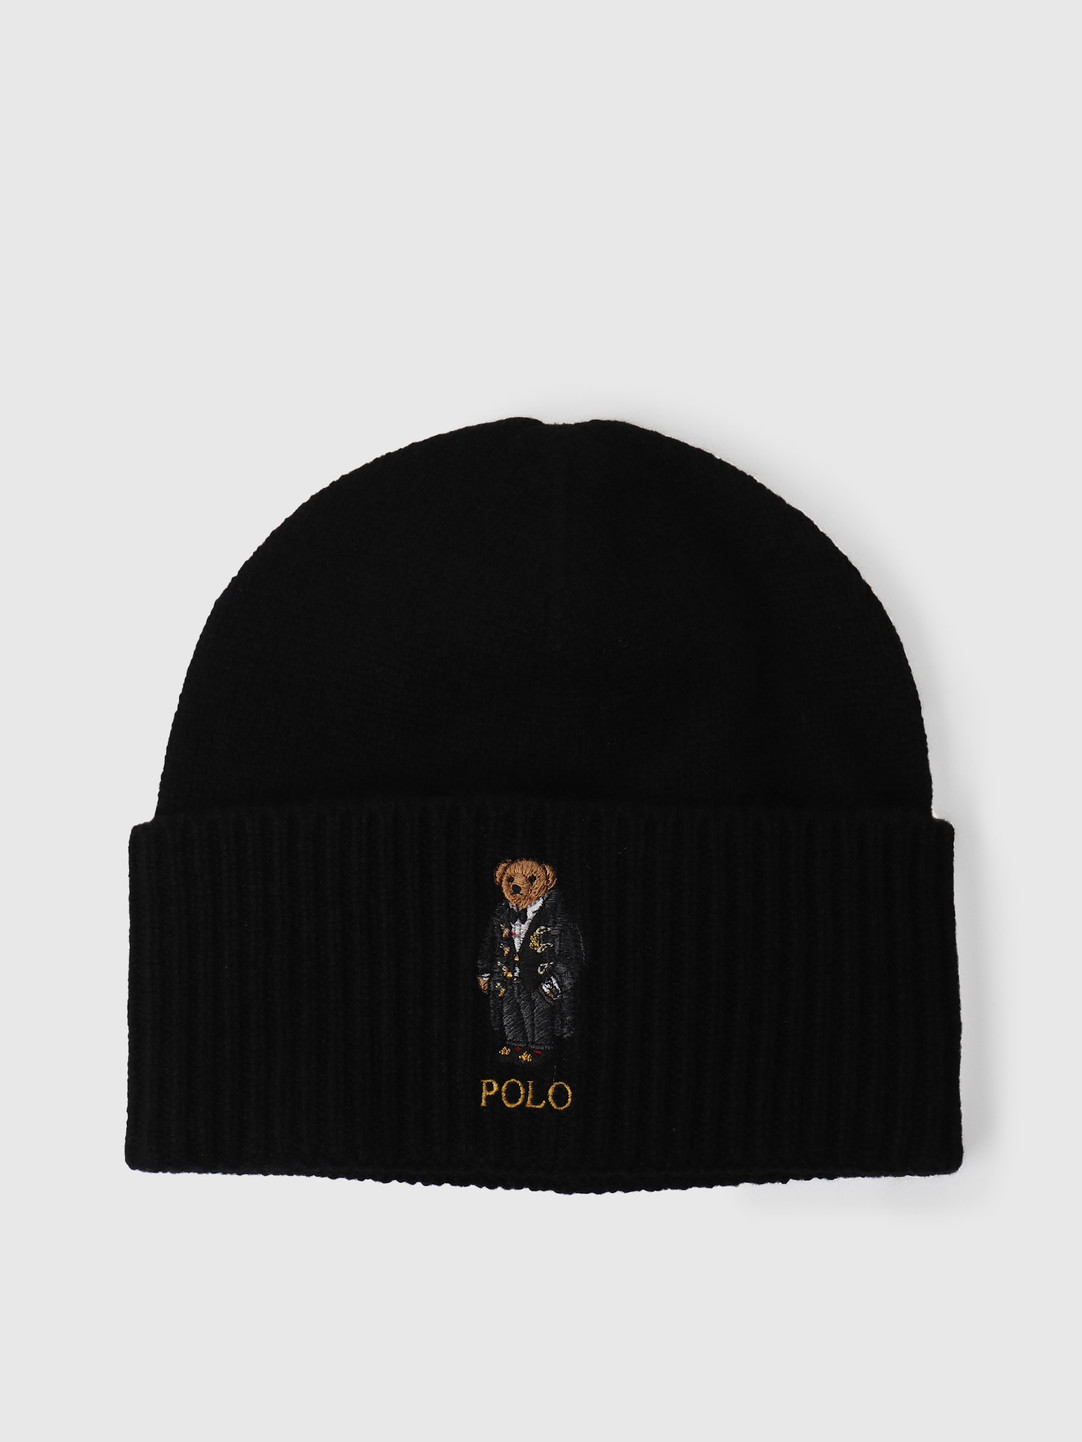 polo hat black